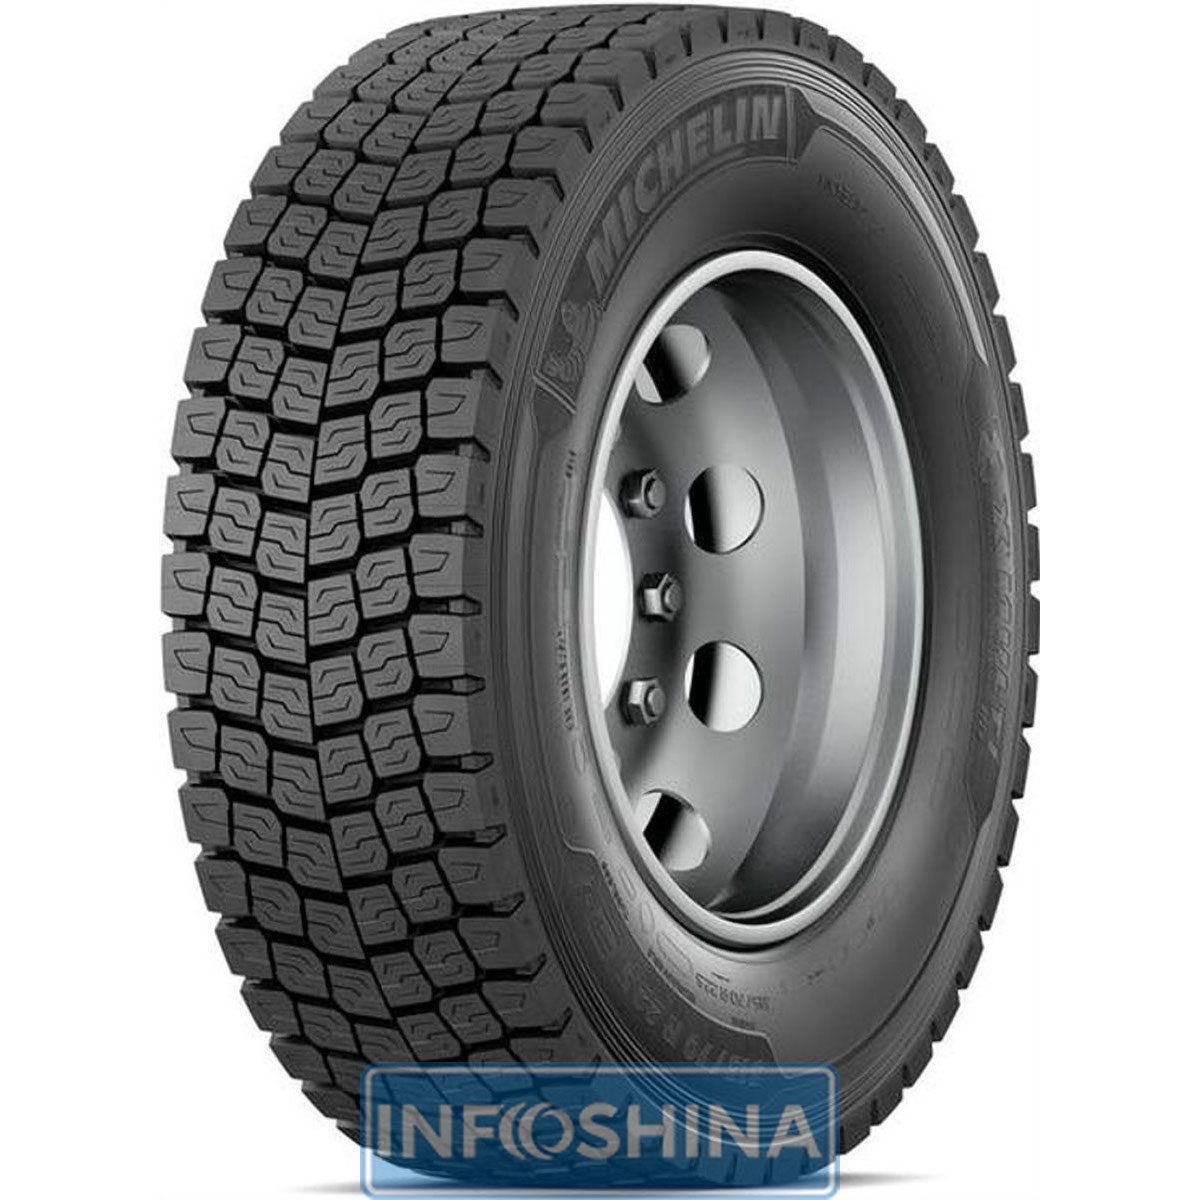 Купить шины Michelin X Multi HD D (ведущая ось) 315/70 R22.5 154/150M